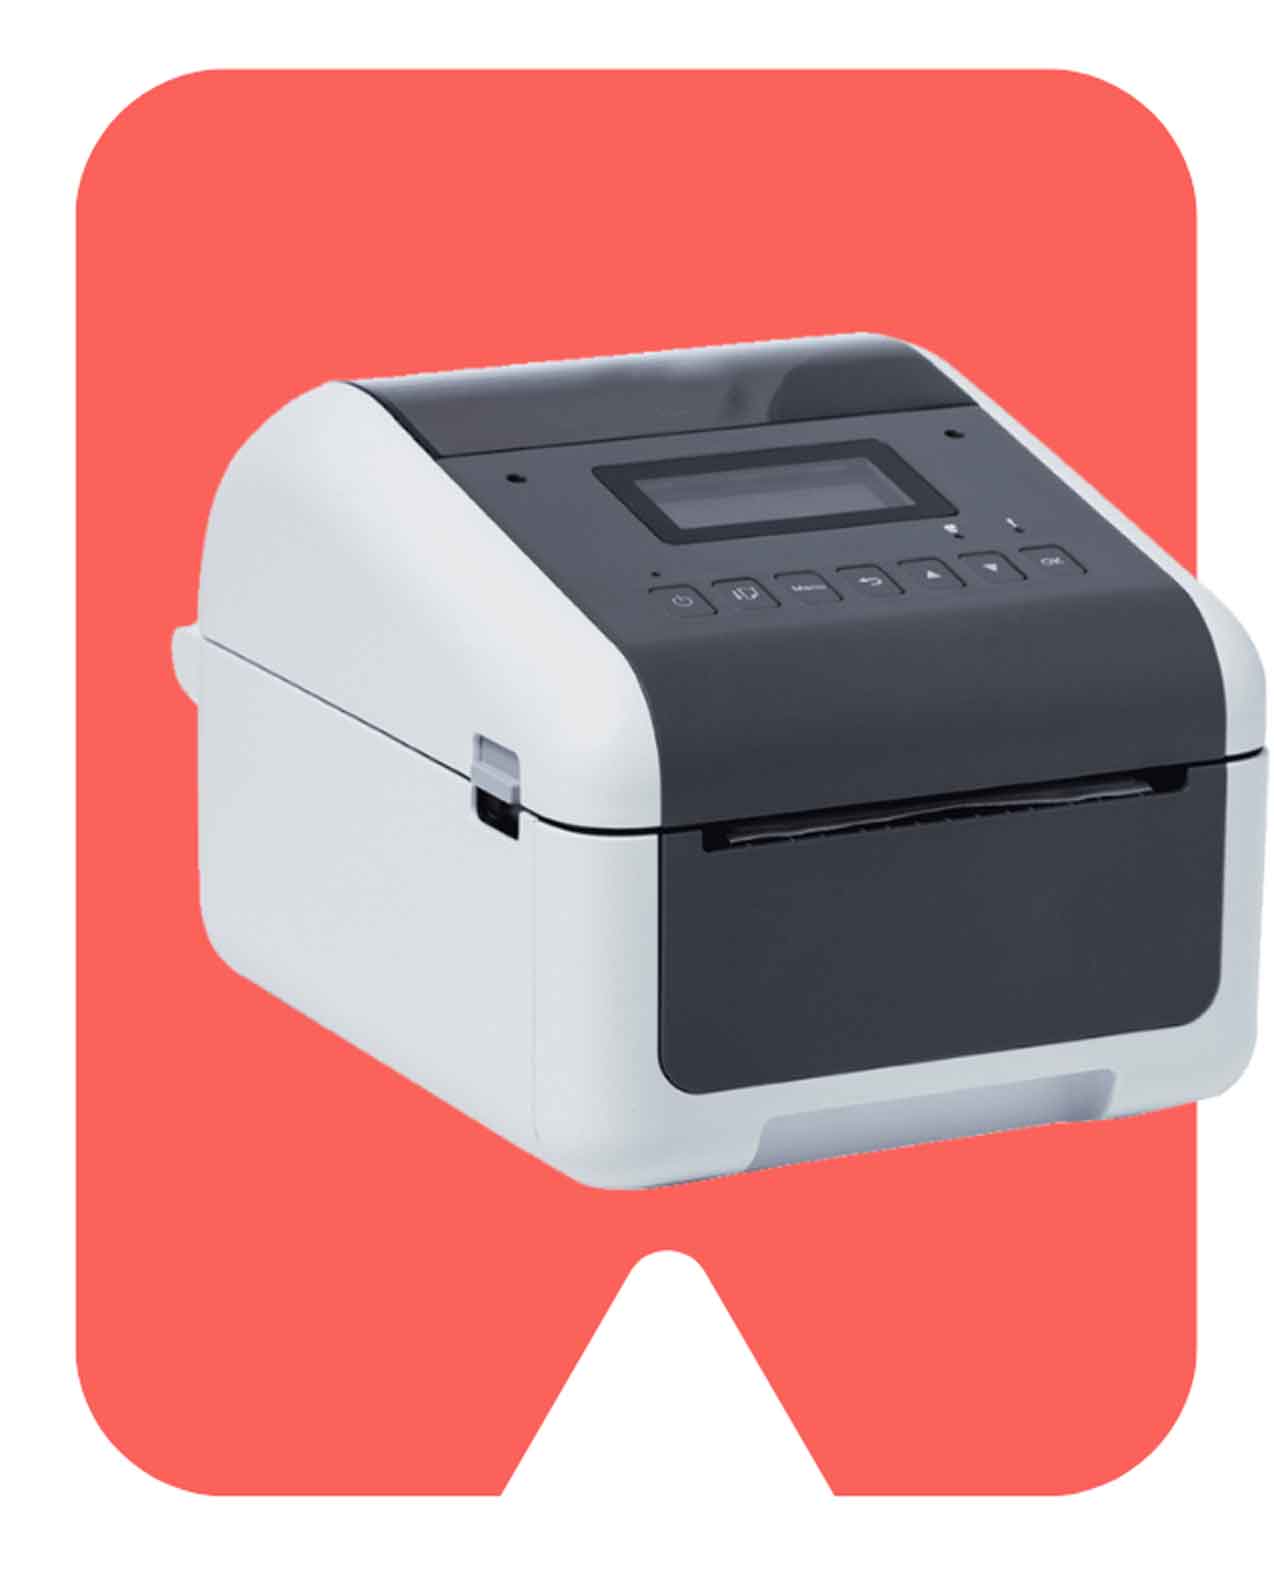 Part of our Digital Food Safety Kit: Our allergen management printer